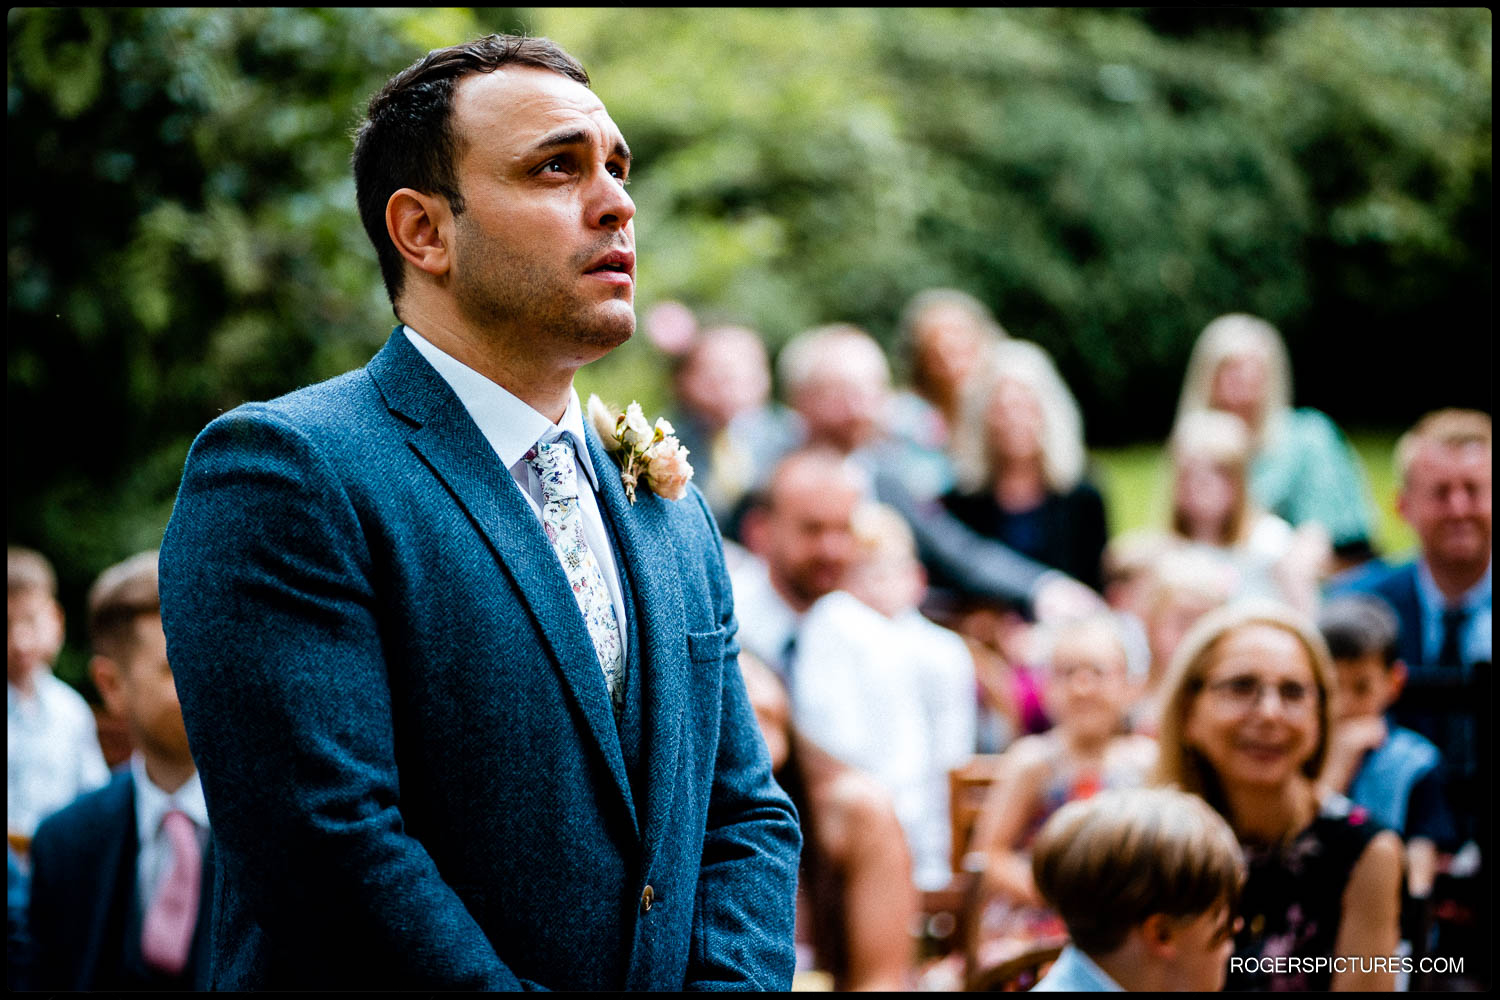 Nervous groom captured at an outdoor wedding in the UK